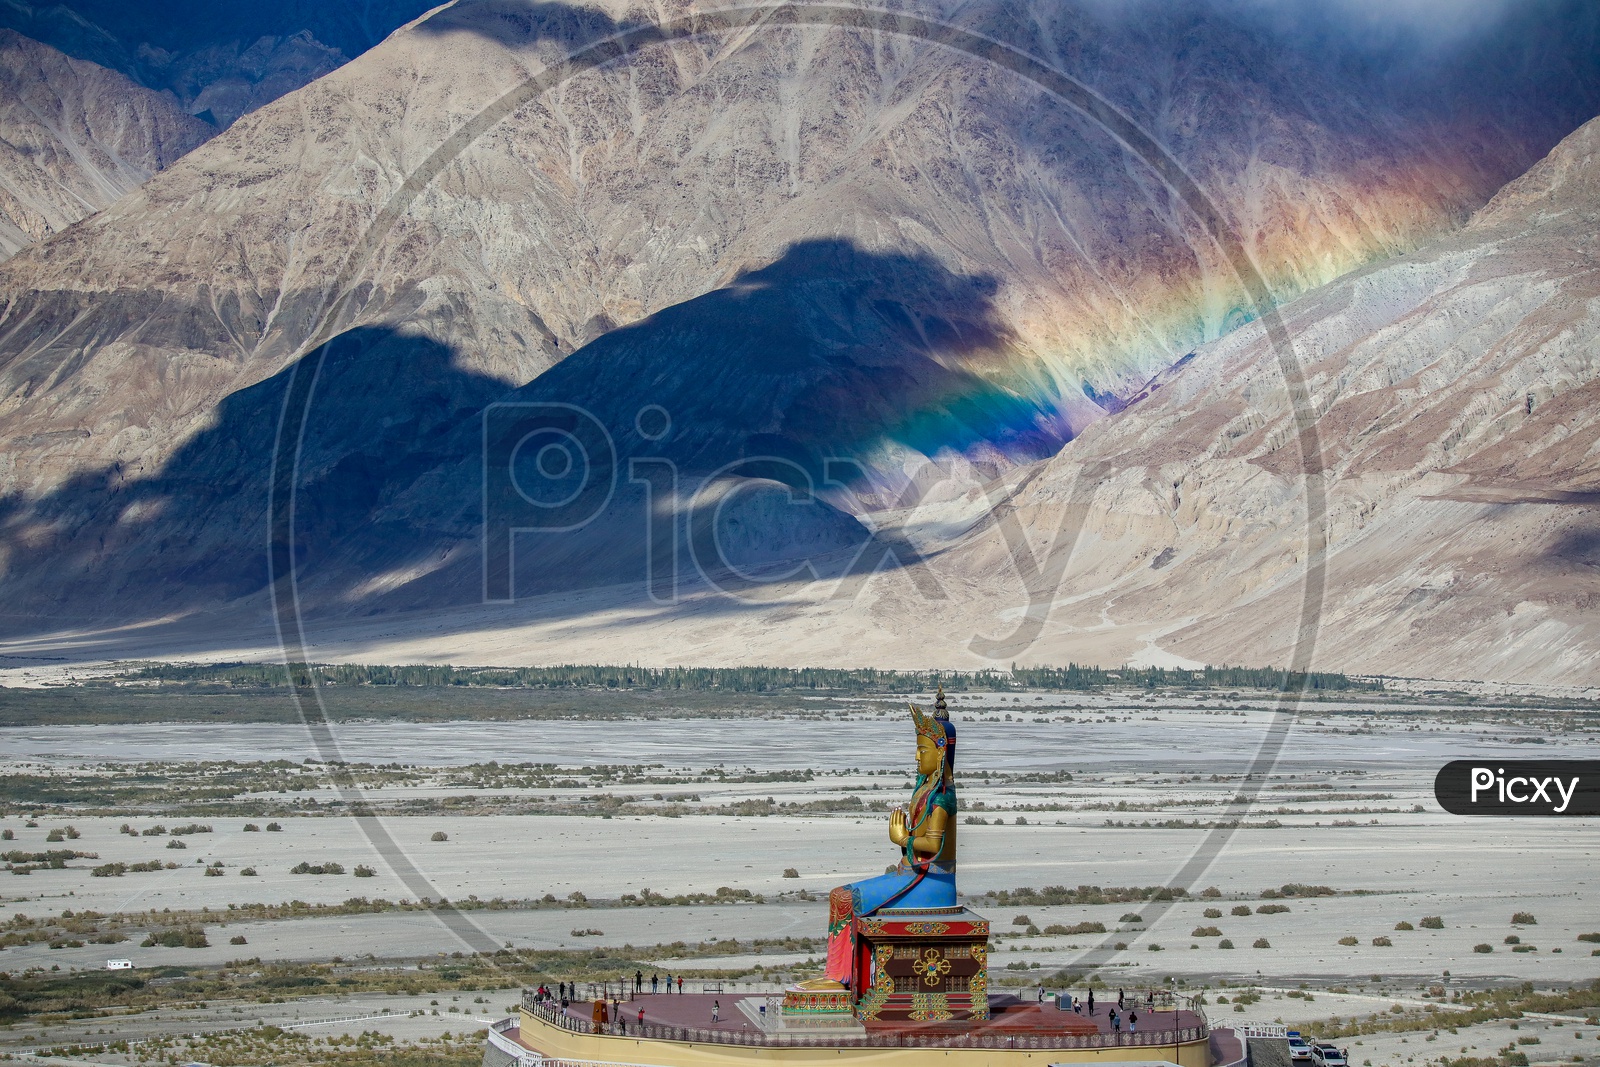 Landscape of rainbow over the hills alongside Big Maitreya Buddha statue at Diskit Monastery, Nubra valley